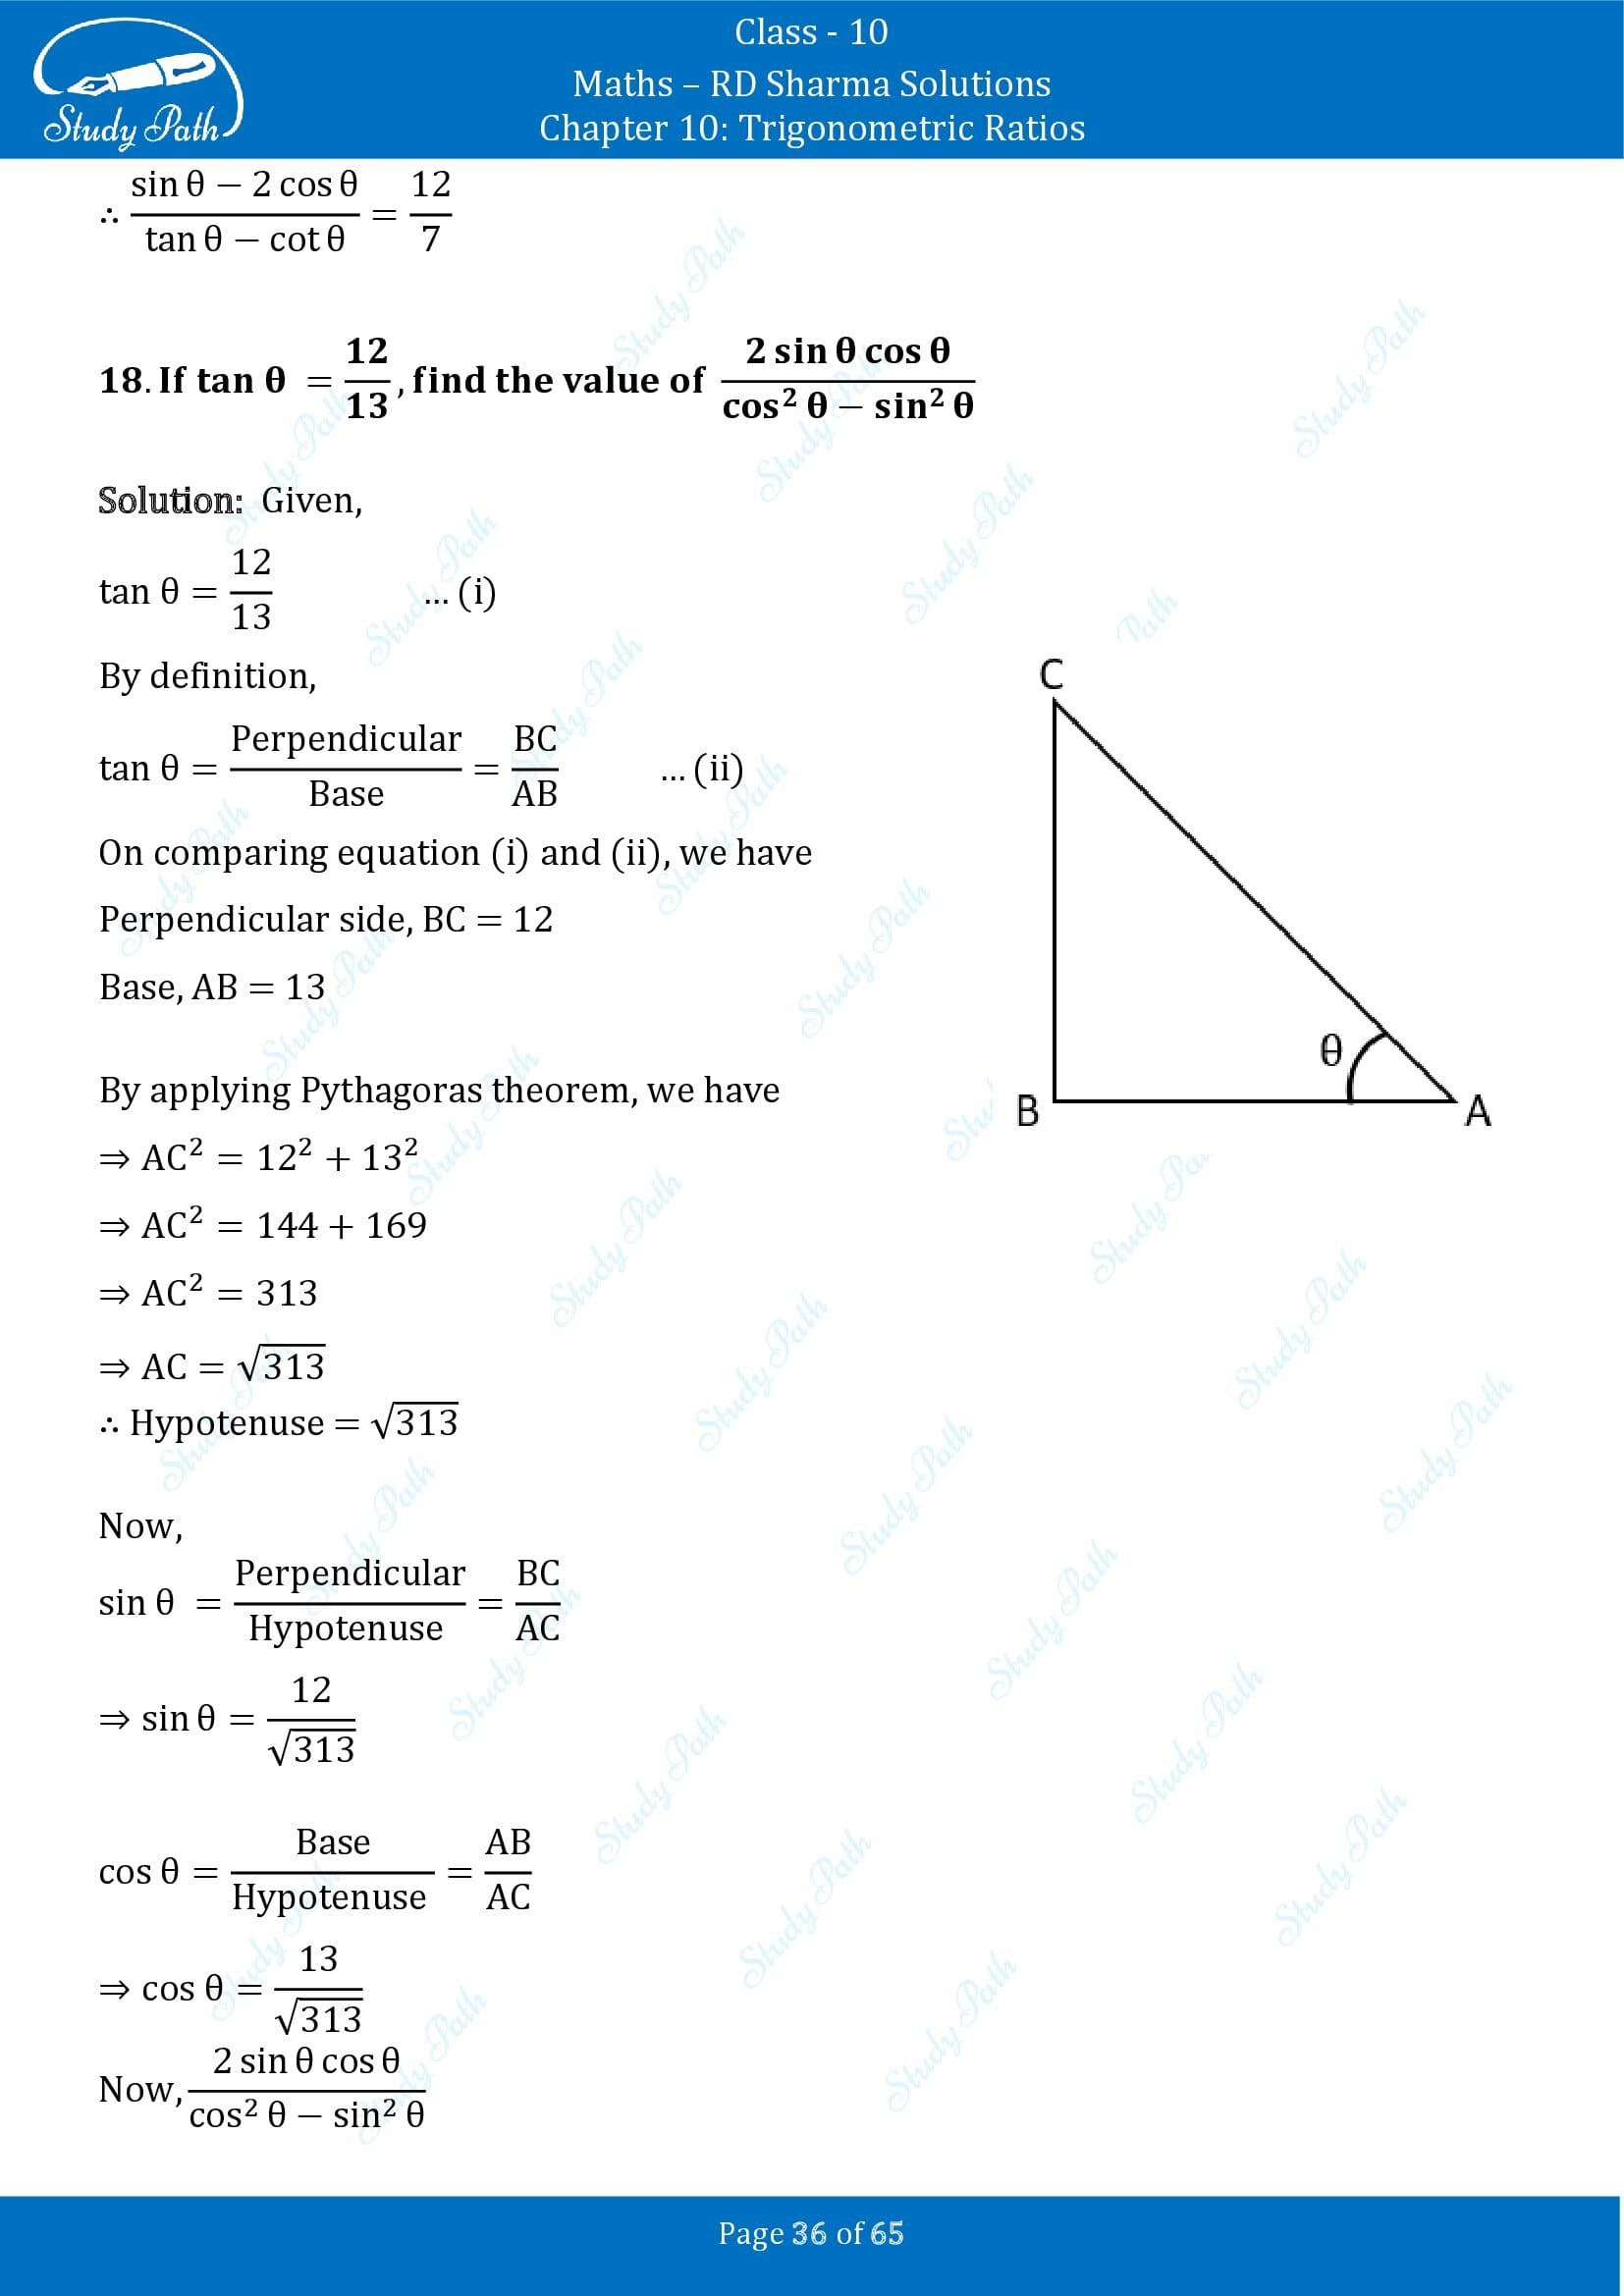 RD Sharma Solutions Class 10 Chapter 10 Trigonometric Ratios Exercise 10.1 00036